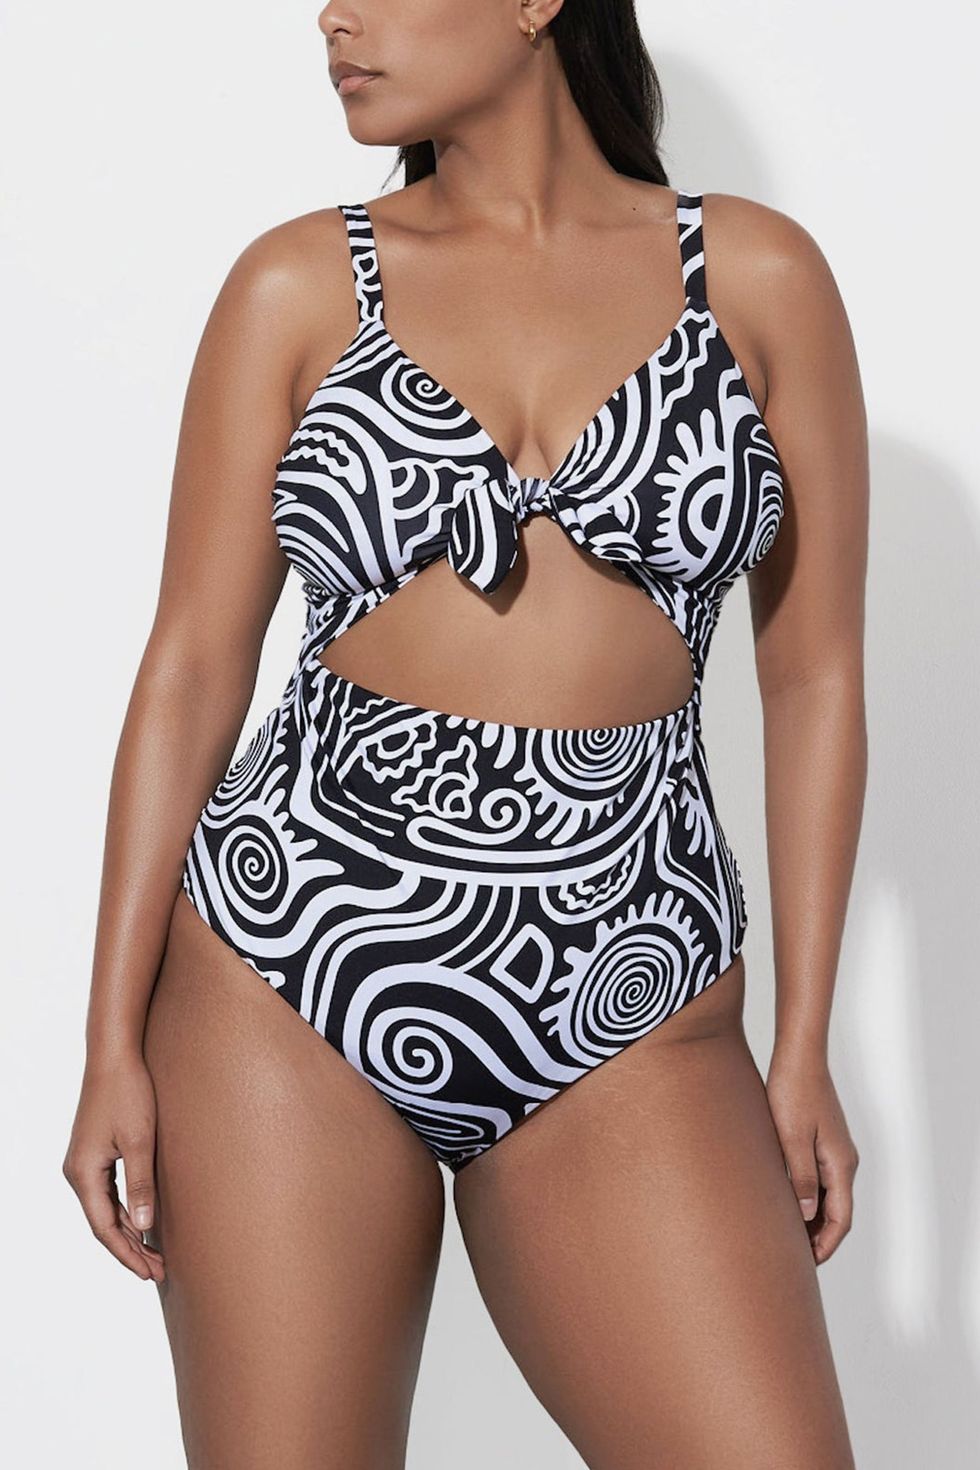 Beach Belle One Piece Swimsuit Womans Plus Size 24 Black & White W/Sarong  NWT